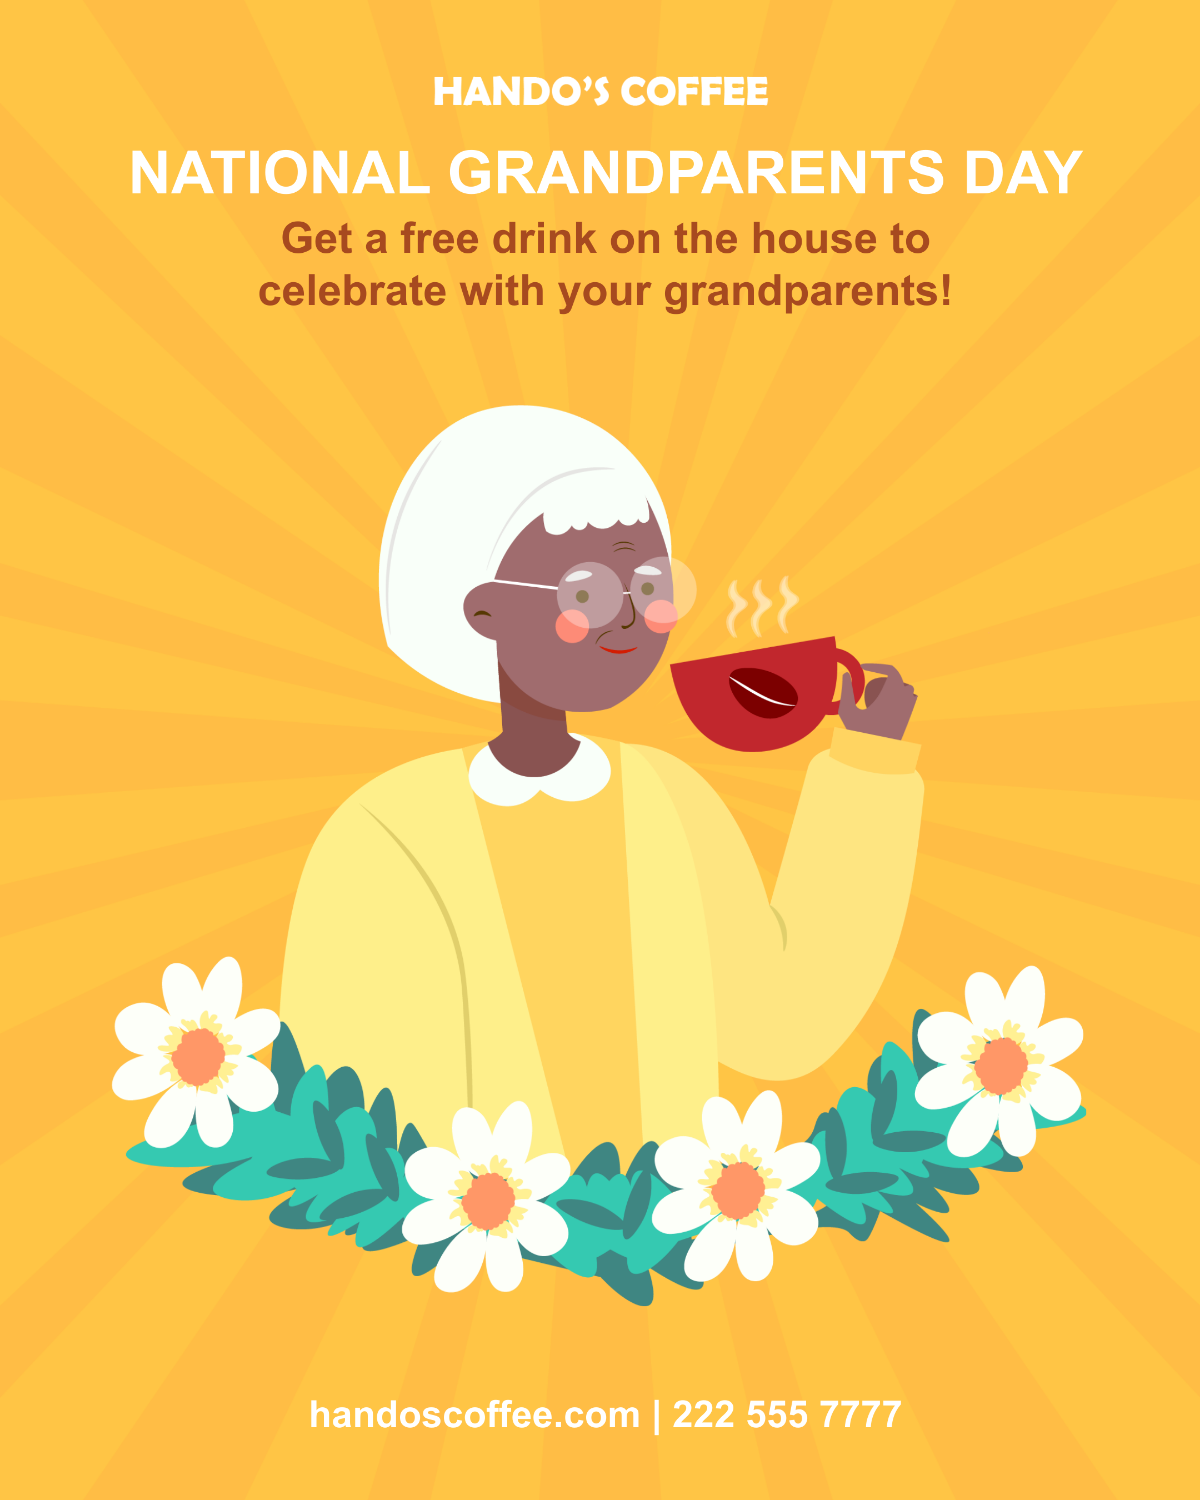 National Grandparents Day  Whatsapp Vertical Post